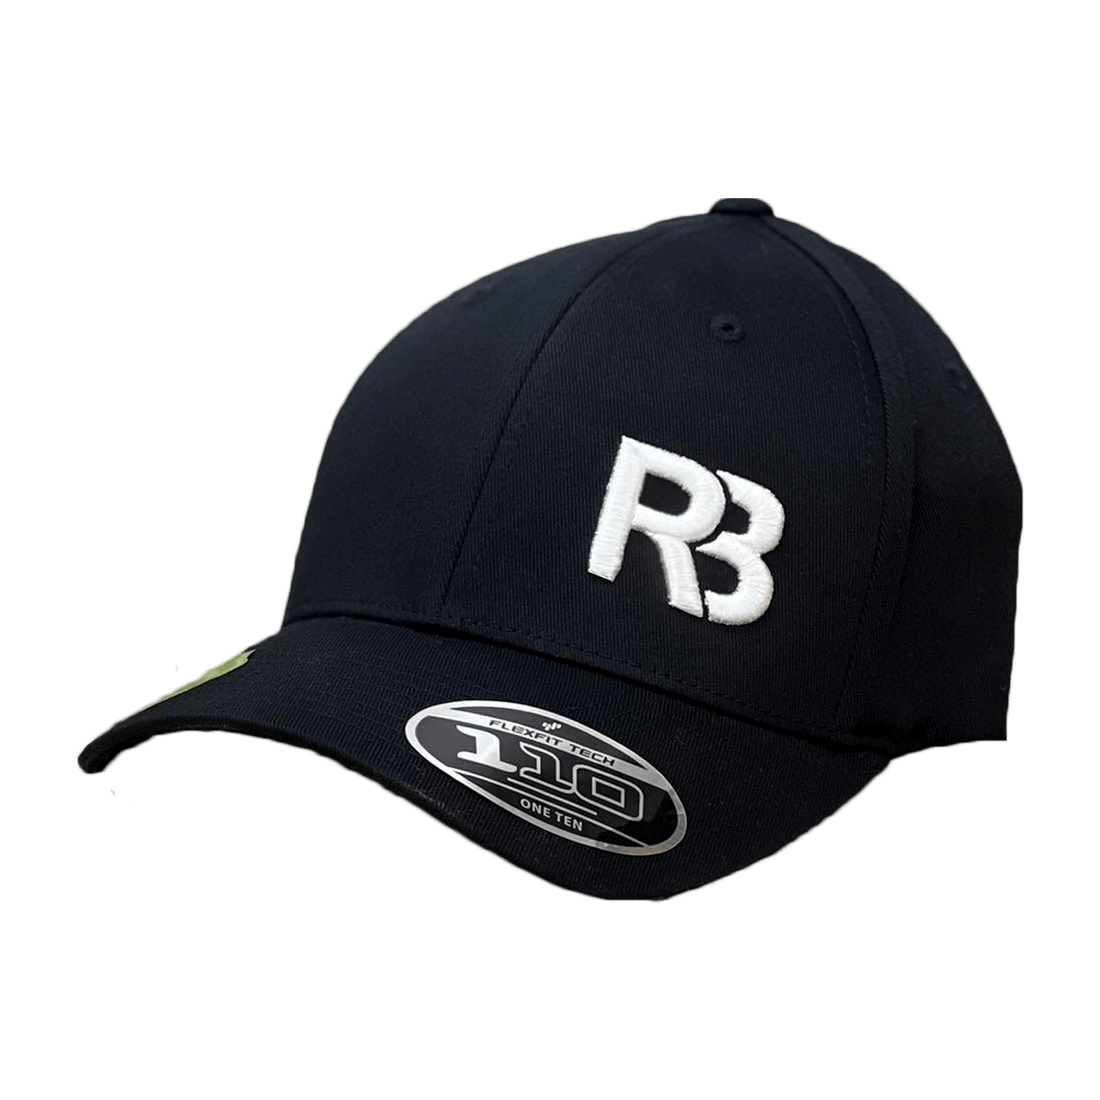 RB Summer Cap